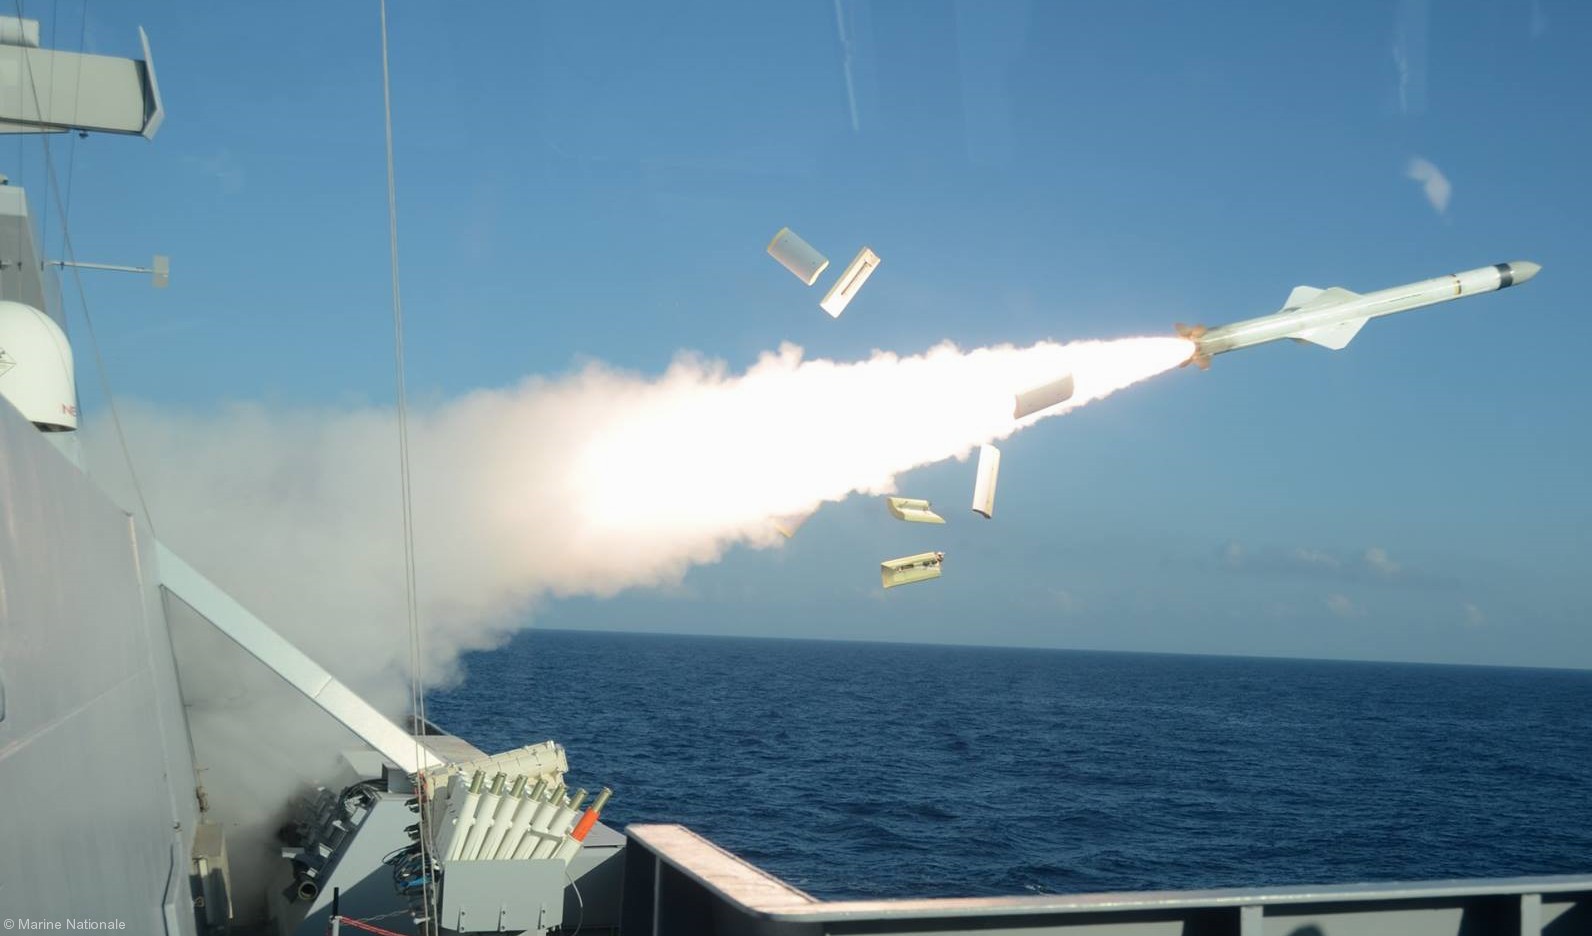 f-713 fs aconit la fayette class frigate flf french navy marine nationale 07 mm40 exocet ssm missile mbda